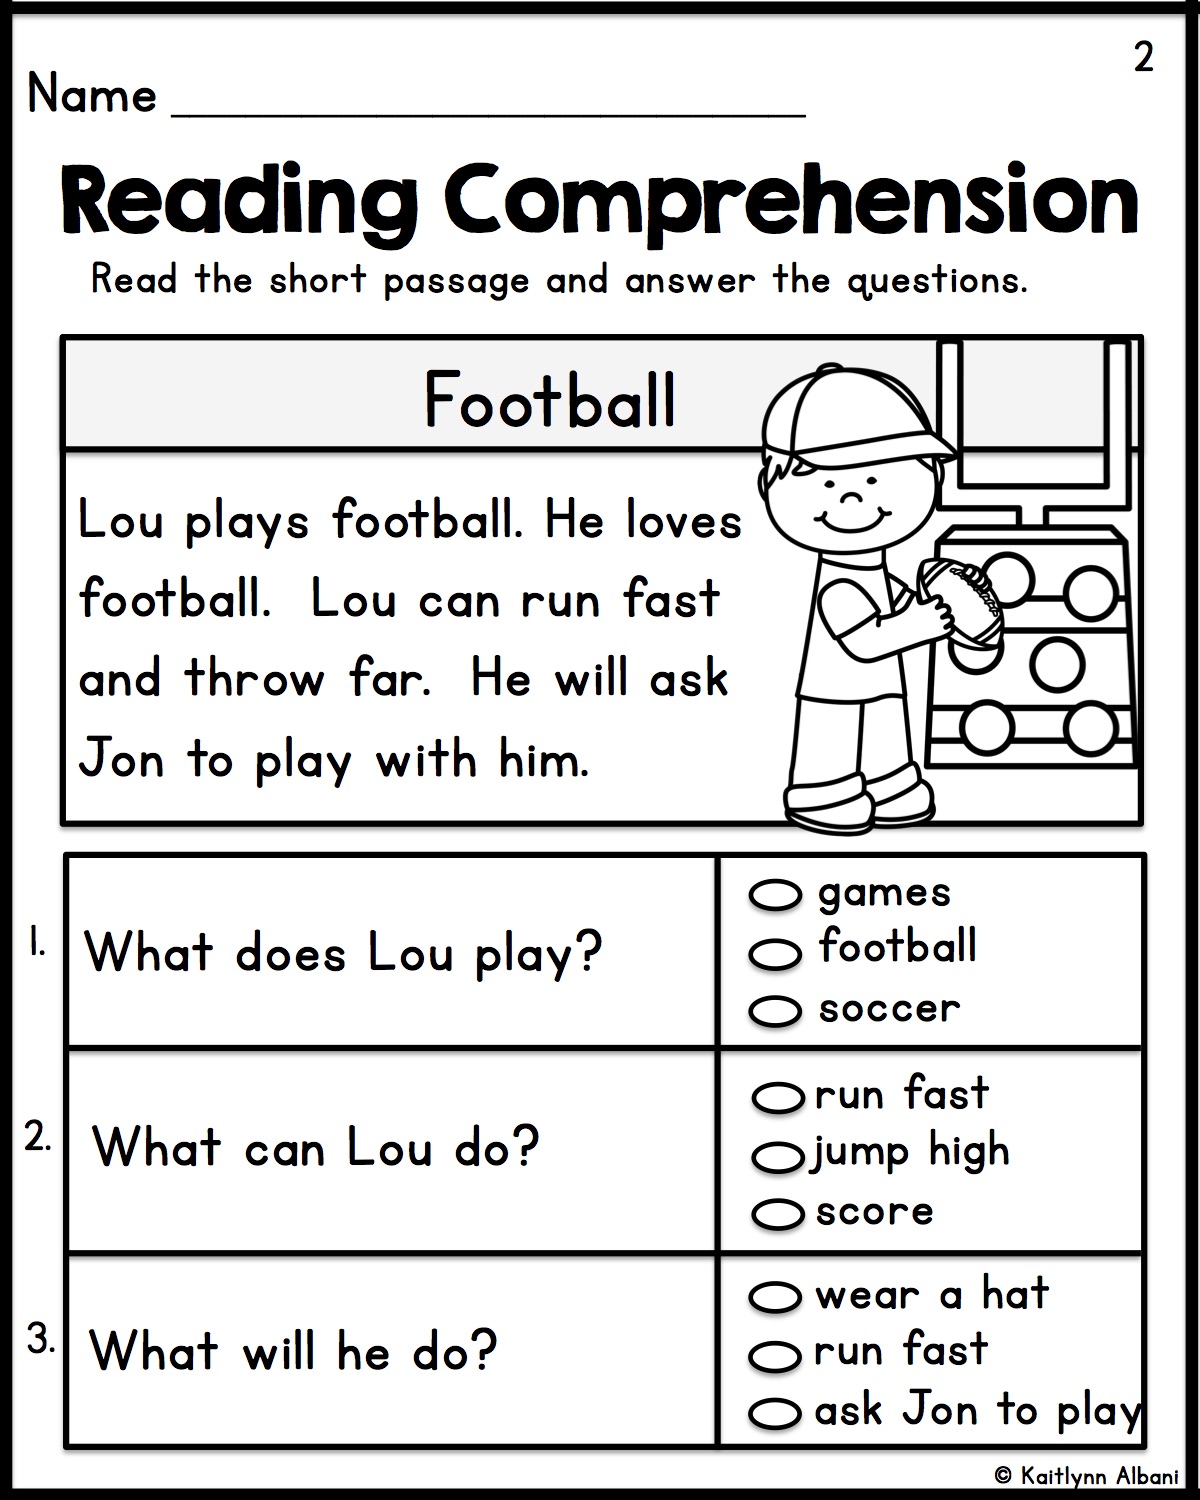 Kindergarten Reading Comprehension Passages